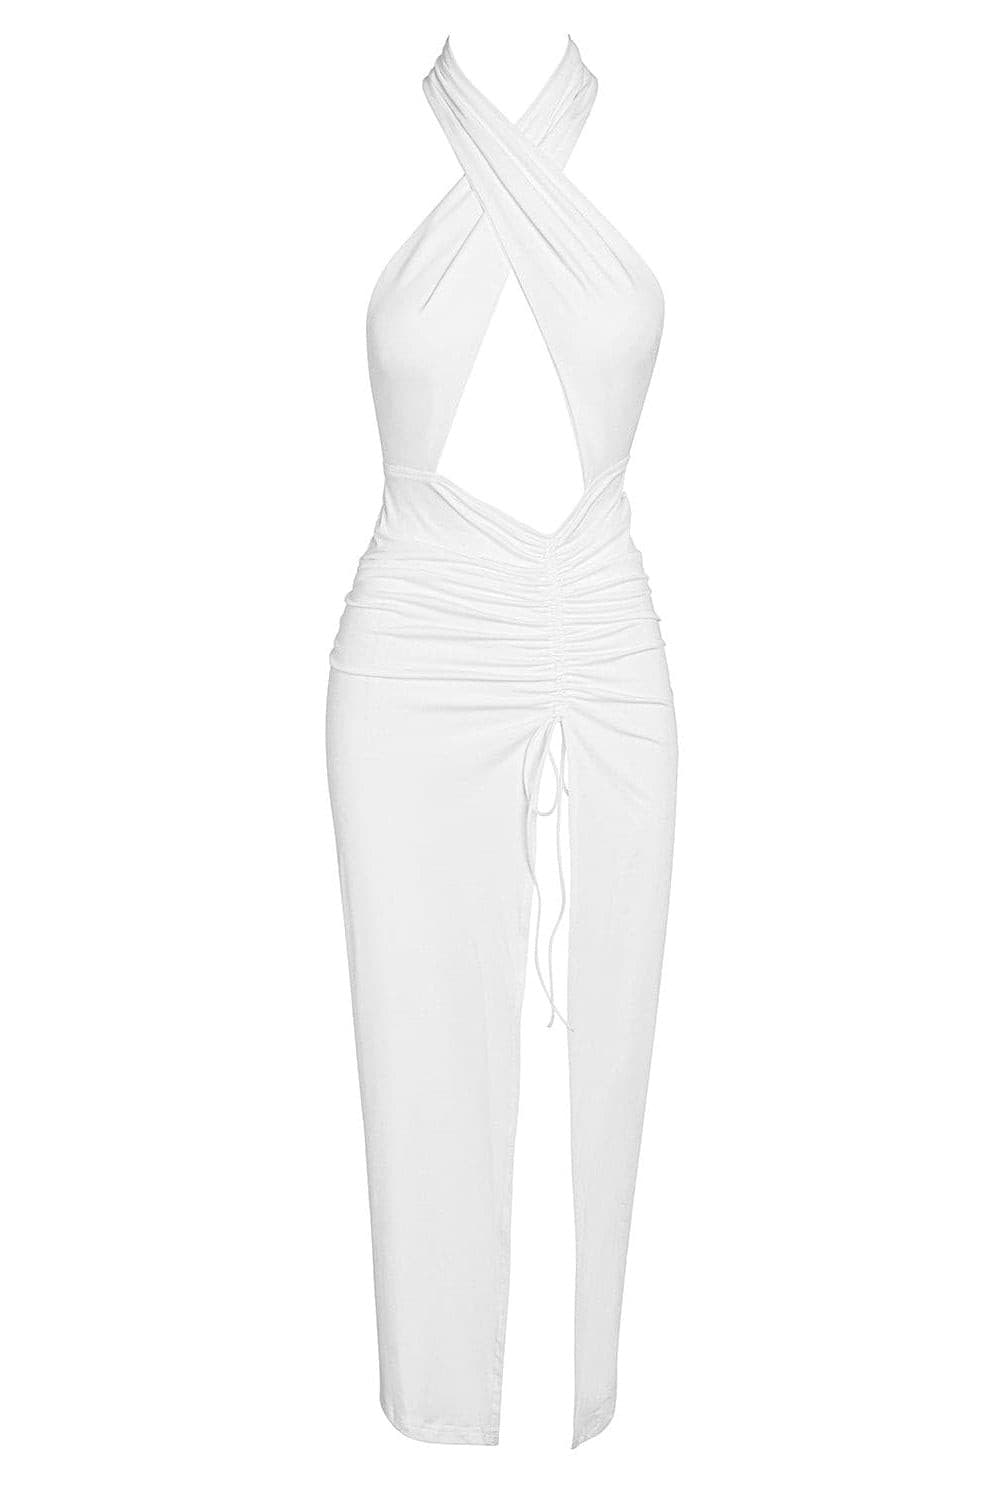 Azores Halter Dress - White (Final Sale).